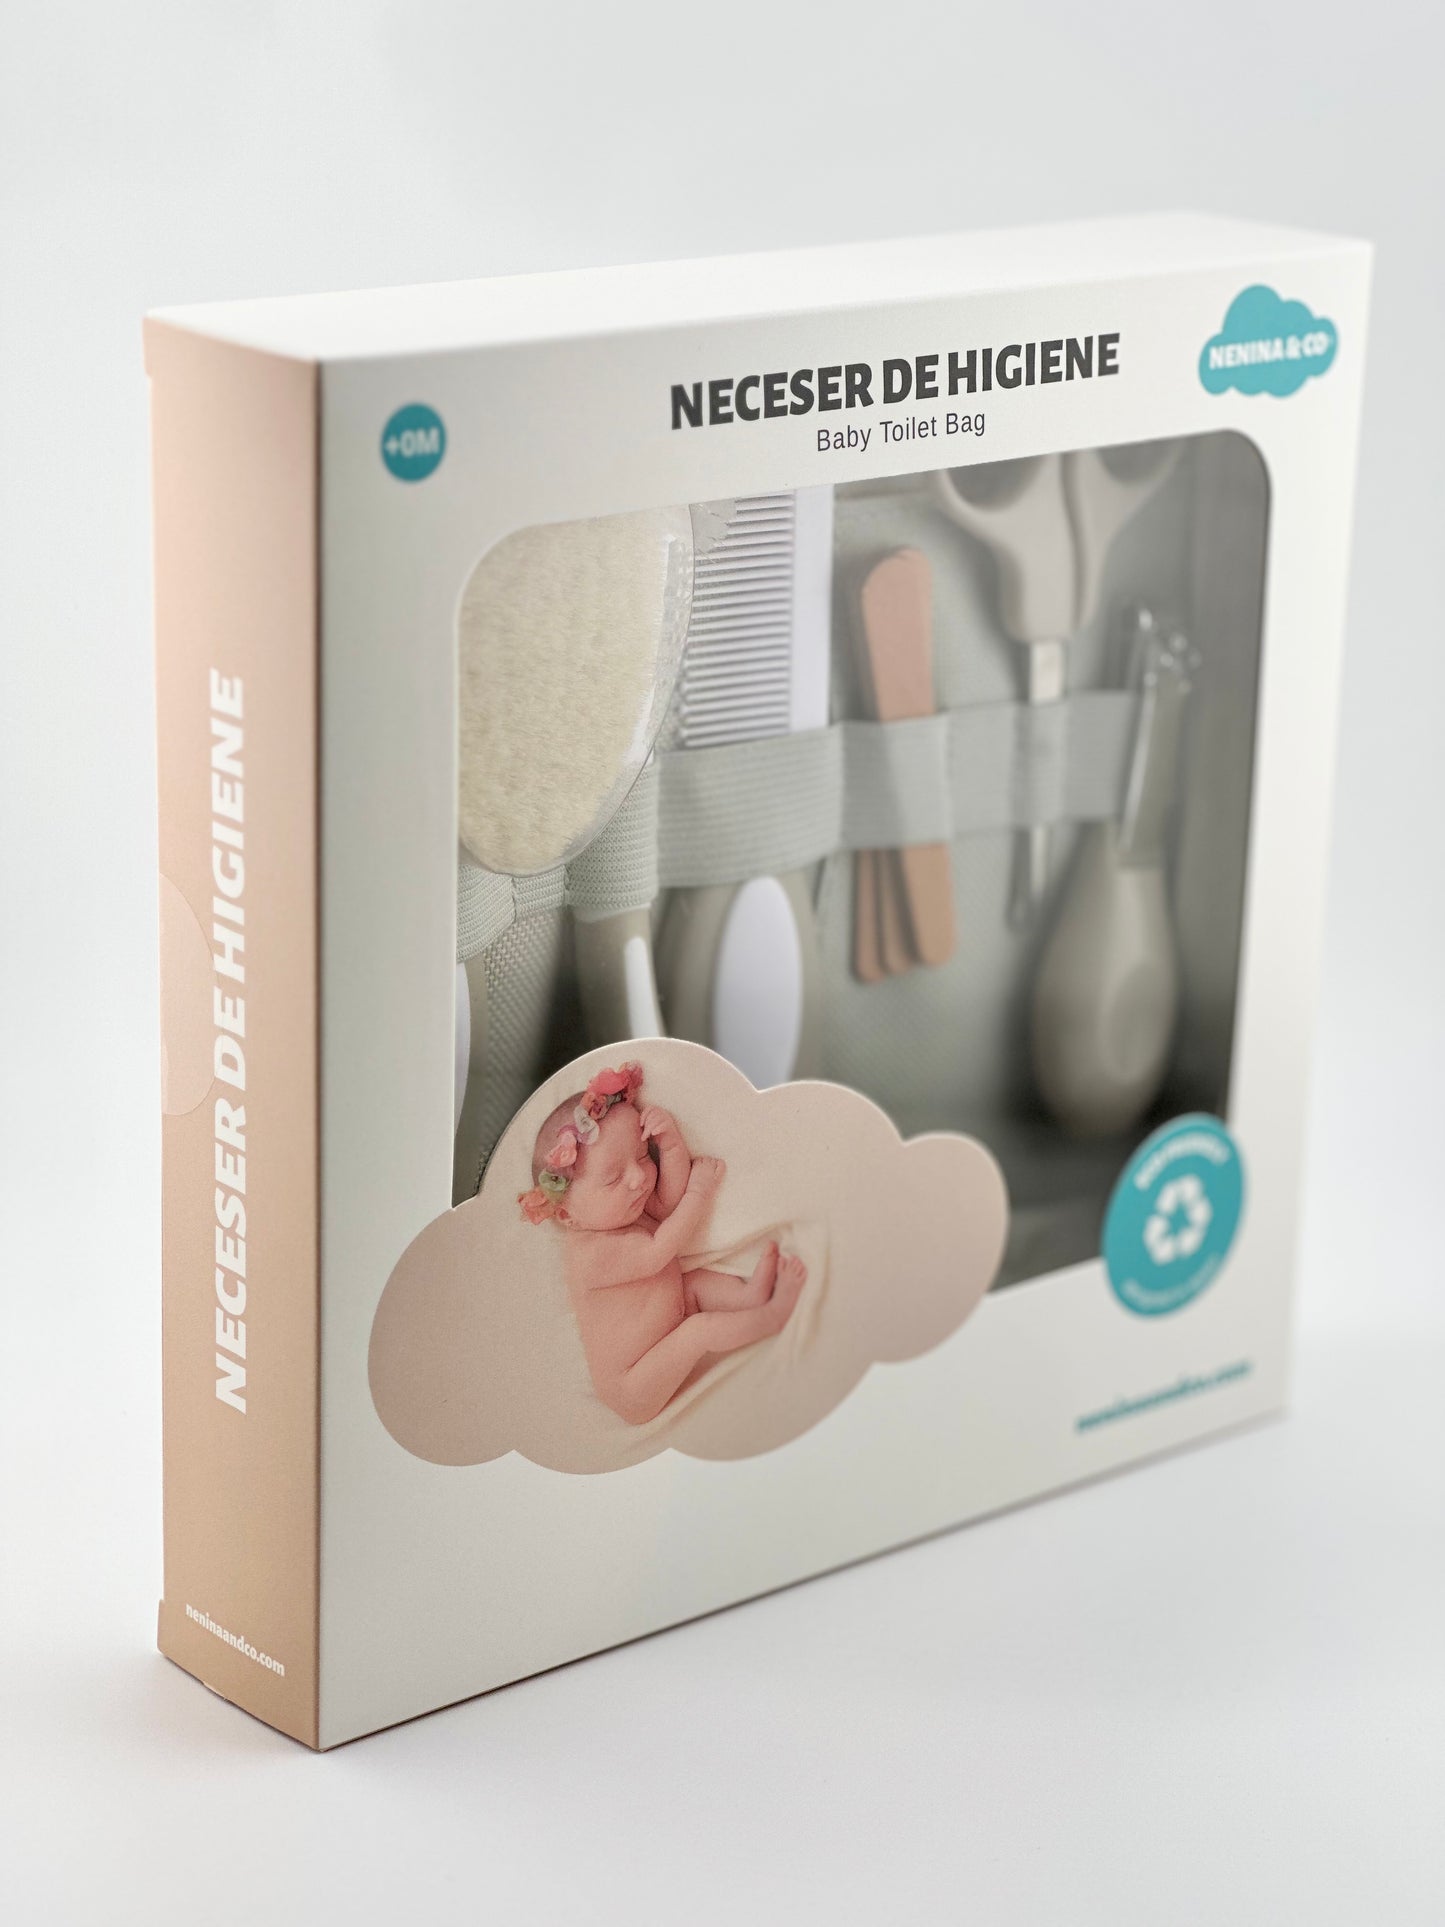 Set de higiene bebé toilet bag Nenina & Co – Nenina & Co®️